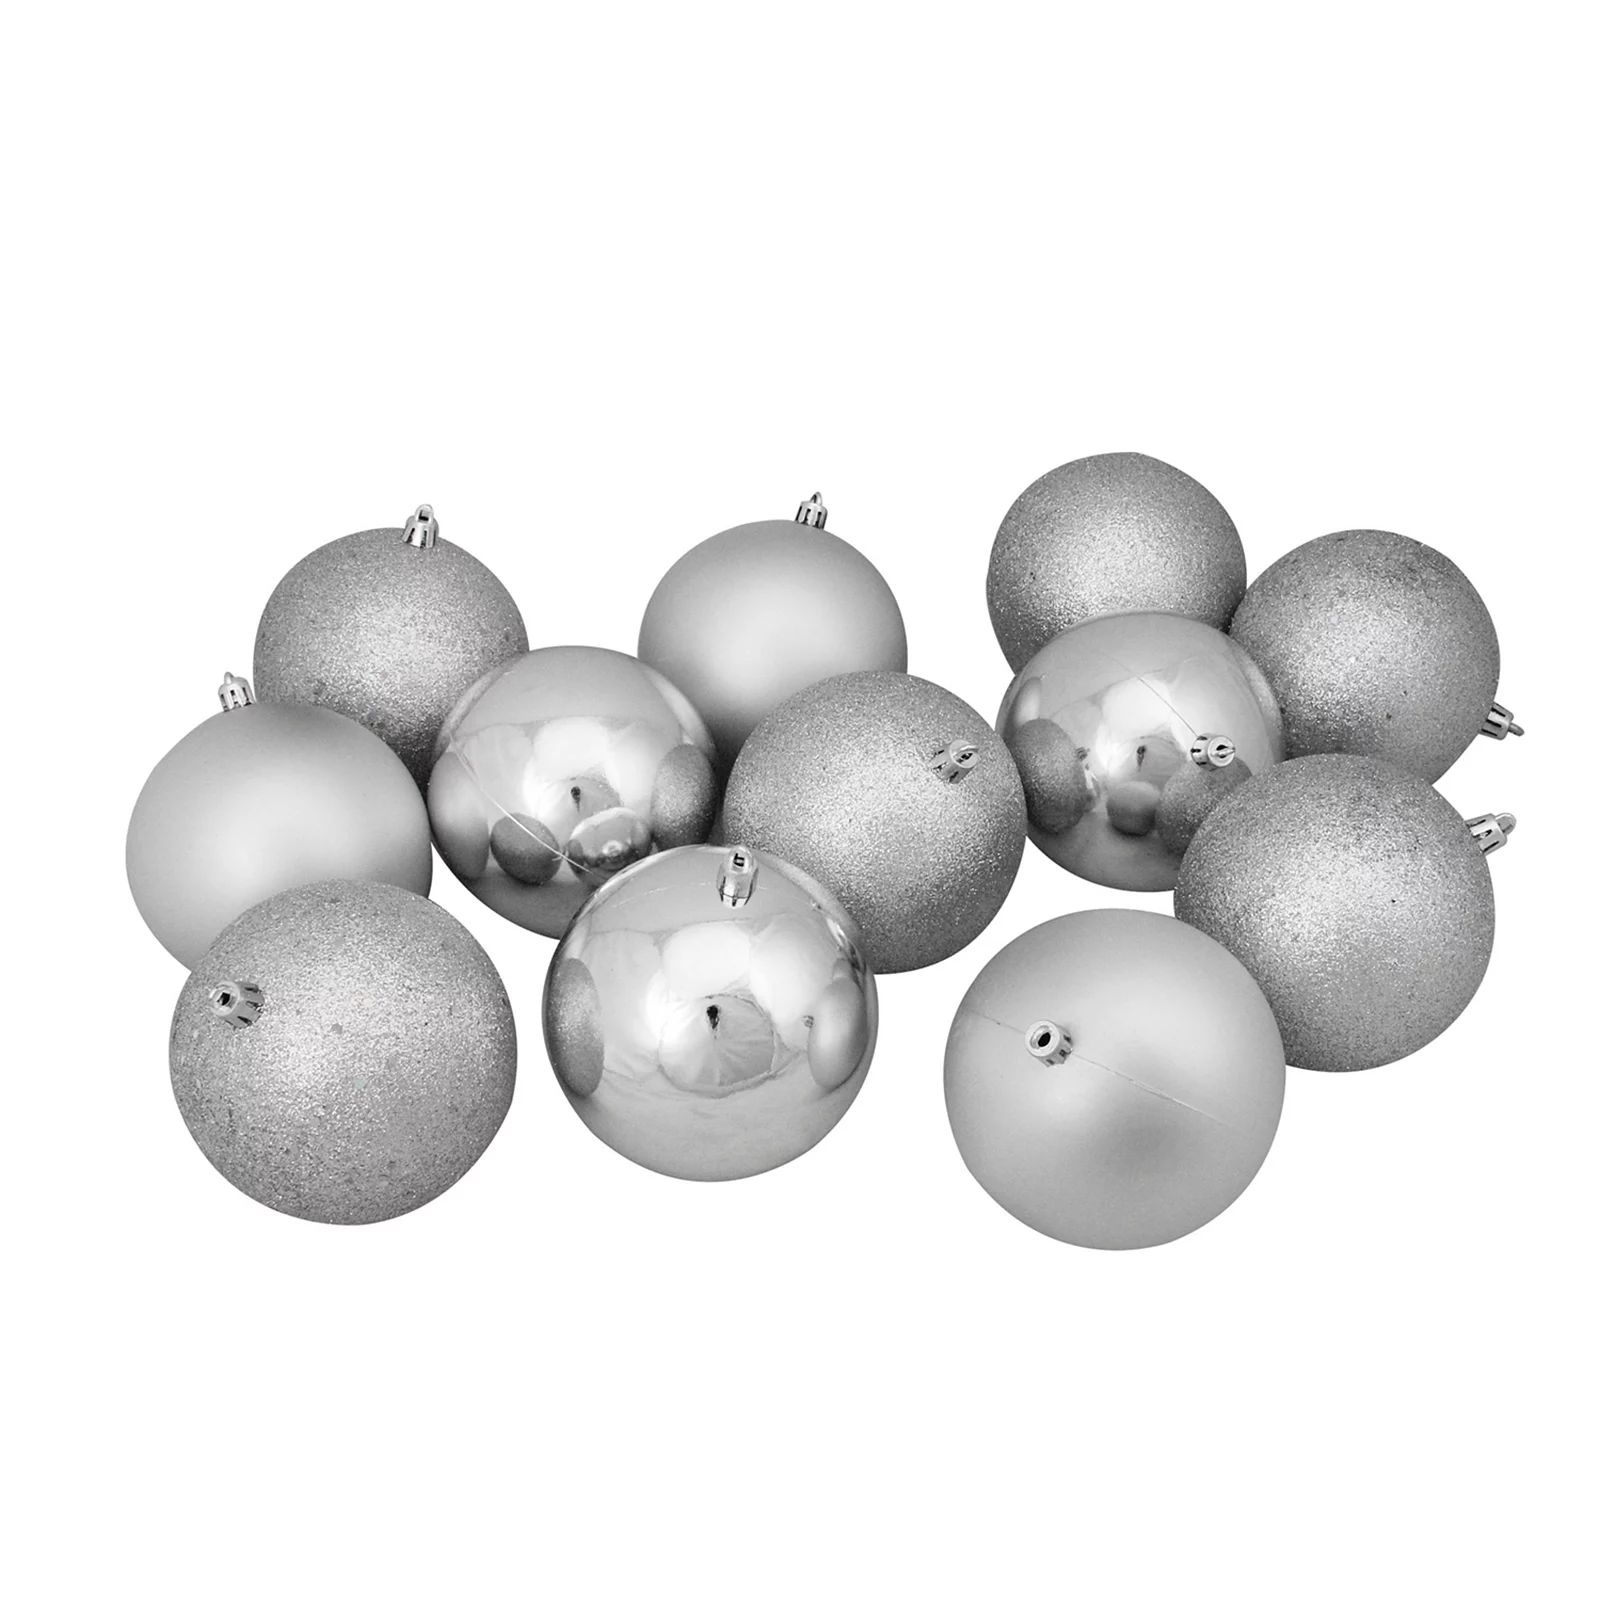 Northlight Seasonal Silver Shatterproof Ball Christmas Ornament 12-piece Set, White | Kohl's